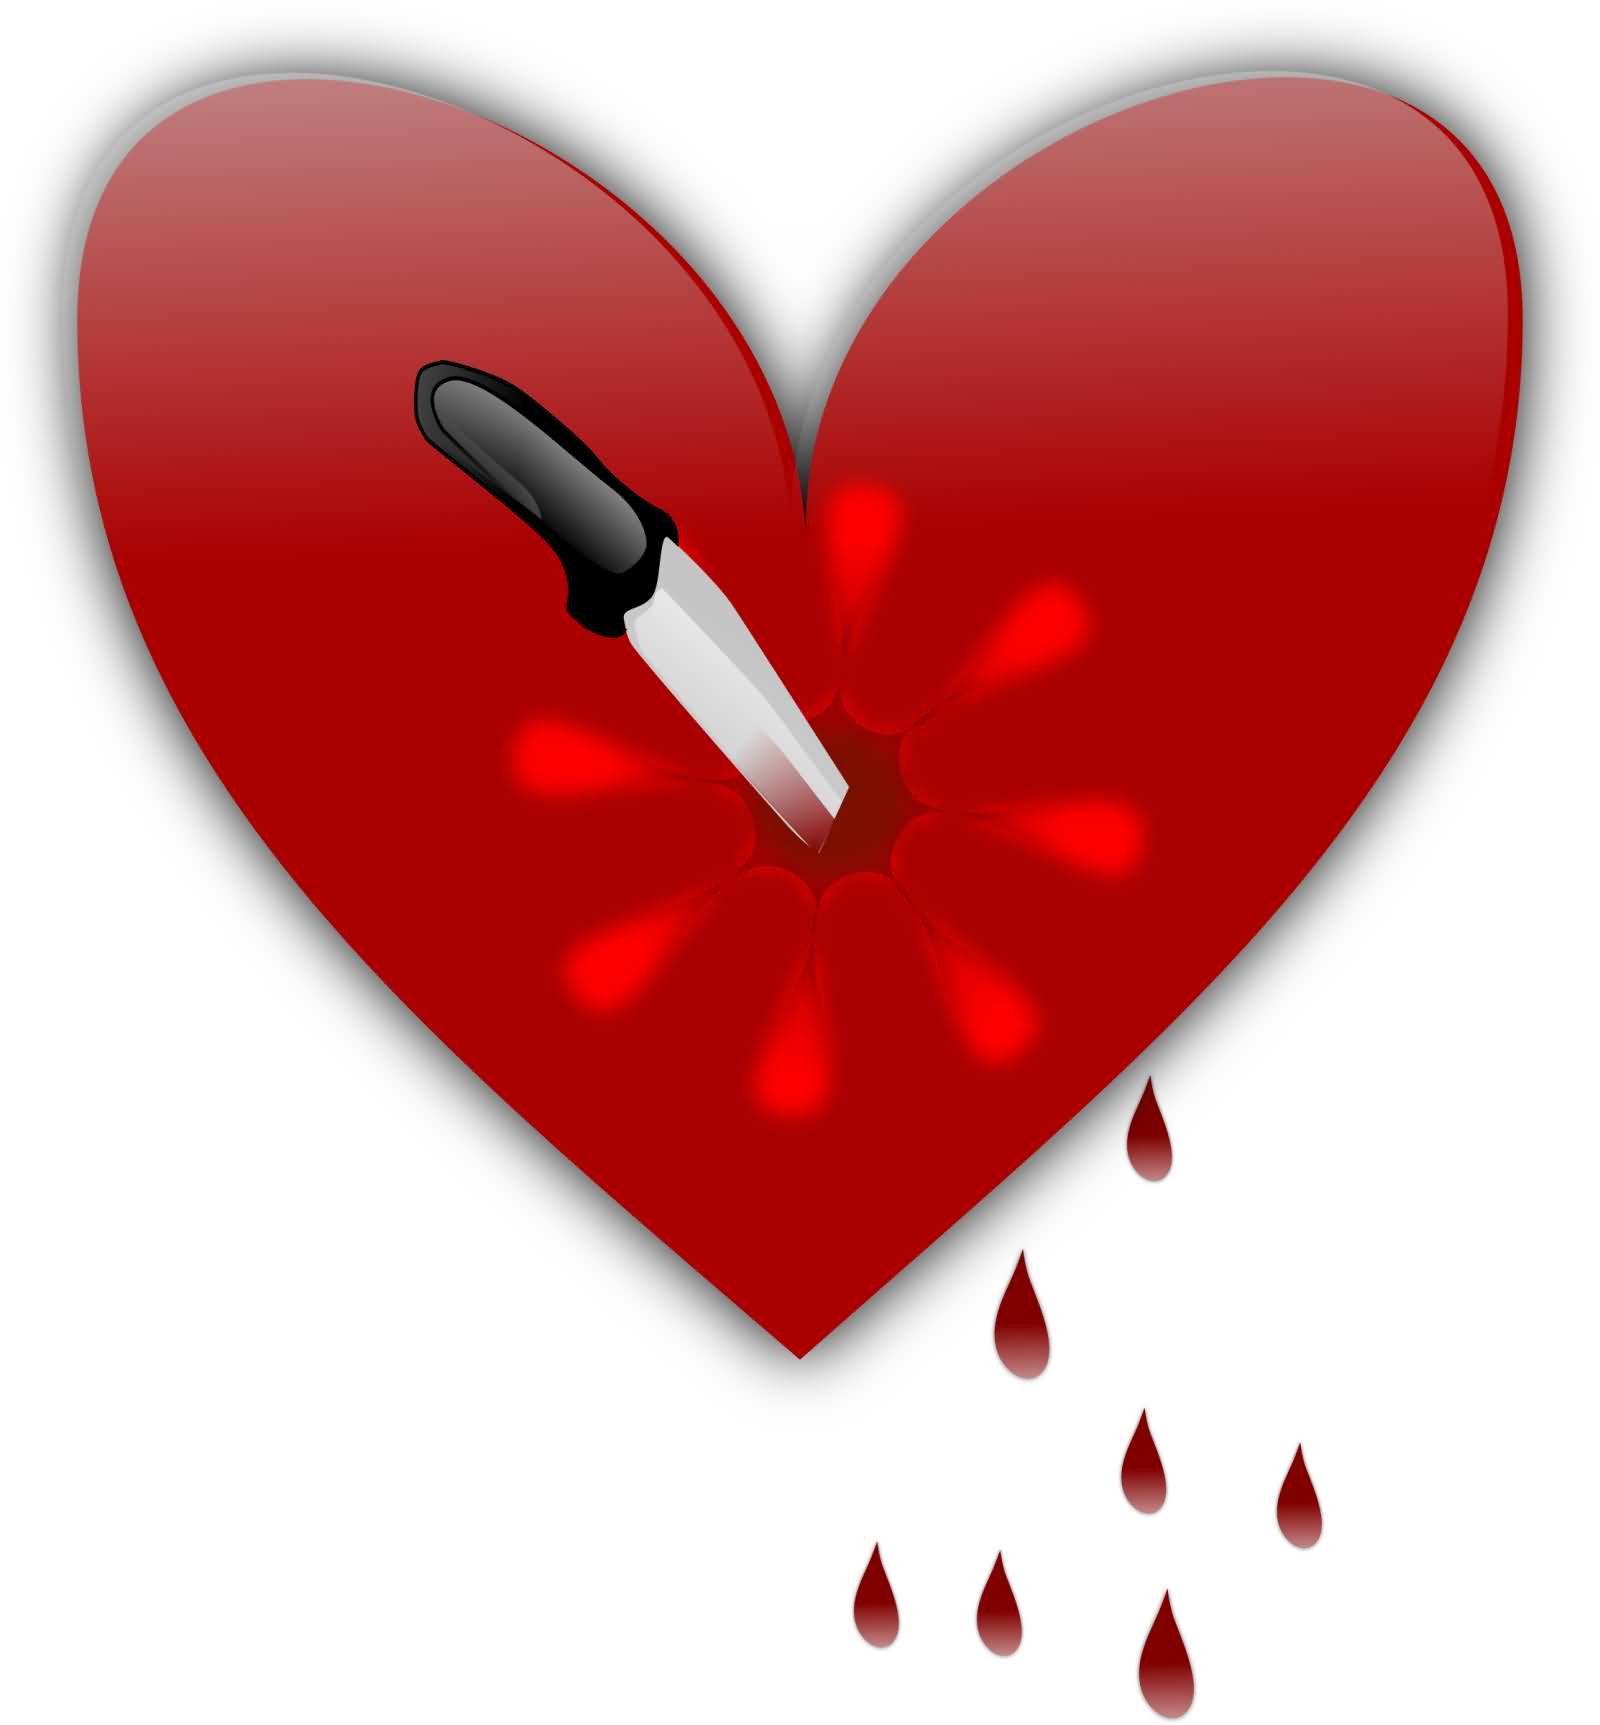 Broken Heart With Knife